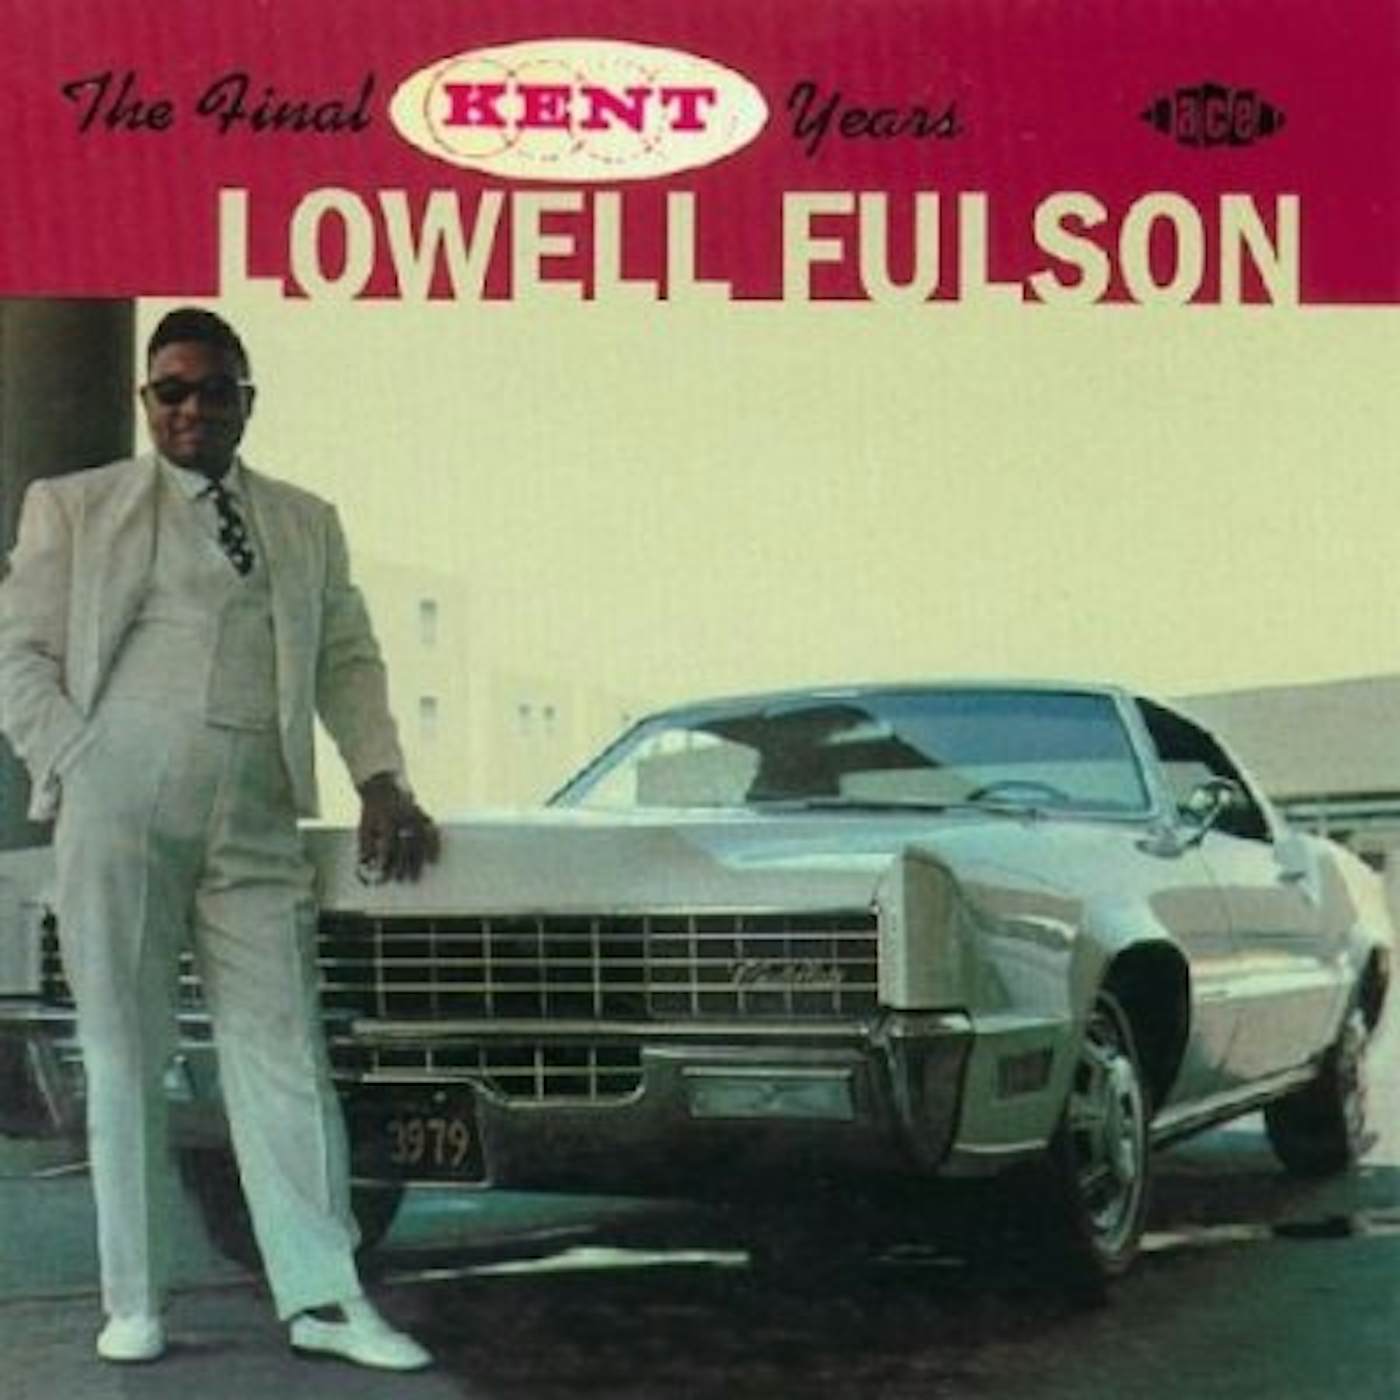 Lowell Fulson FINAL KENT YEARS CD